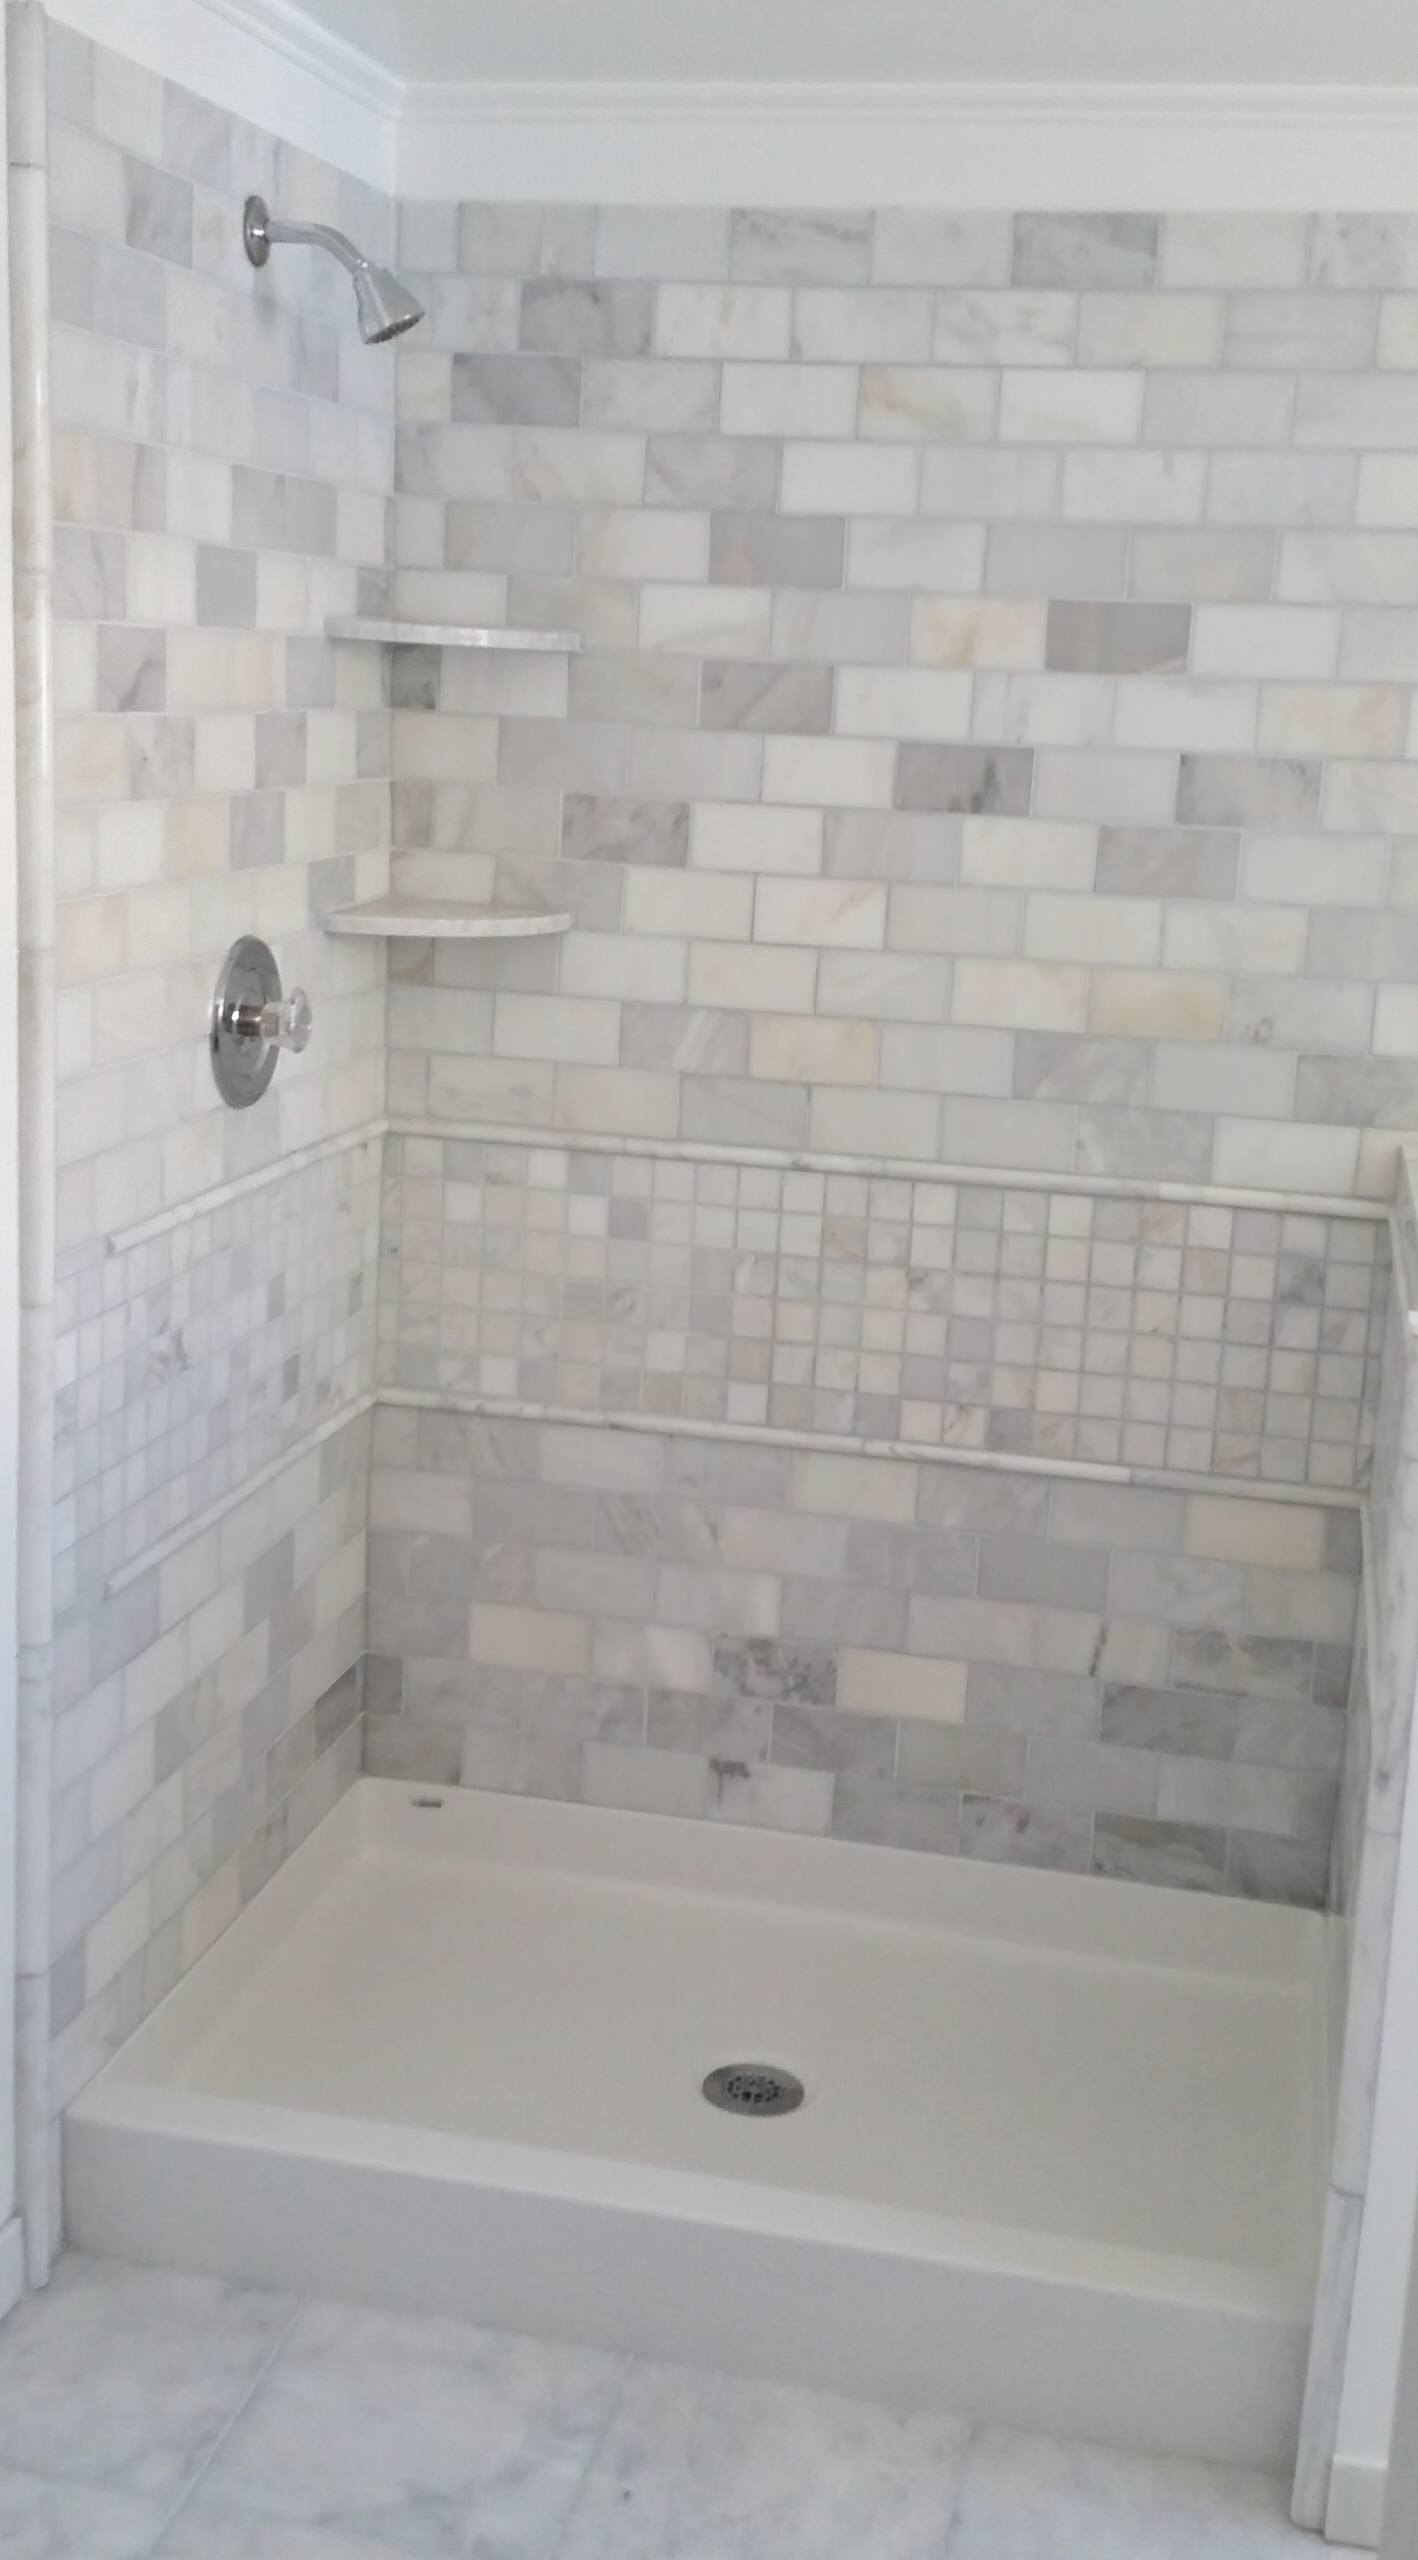 Corner Soap Dish Bathroom Ideas Houzz, Installing A Soap Dish In Tile Shower